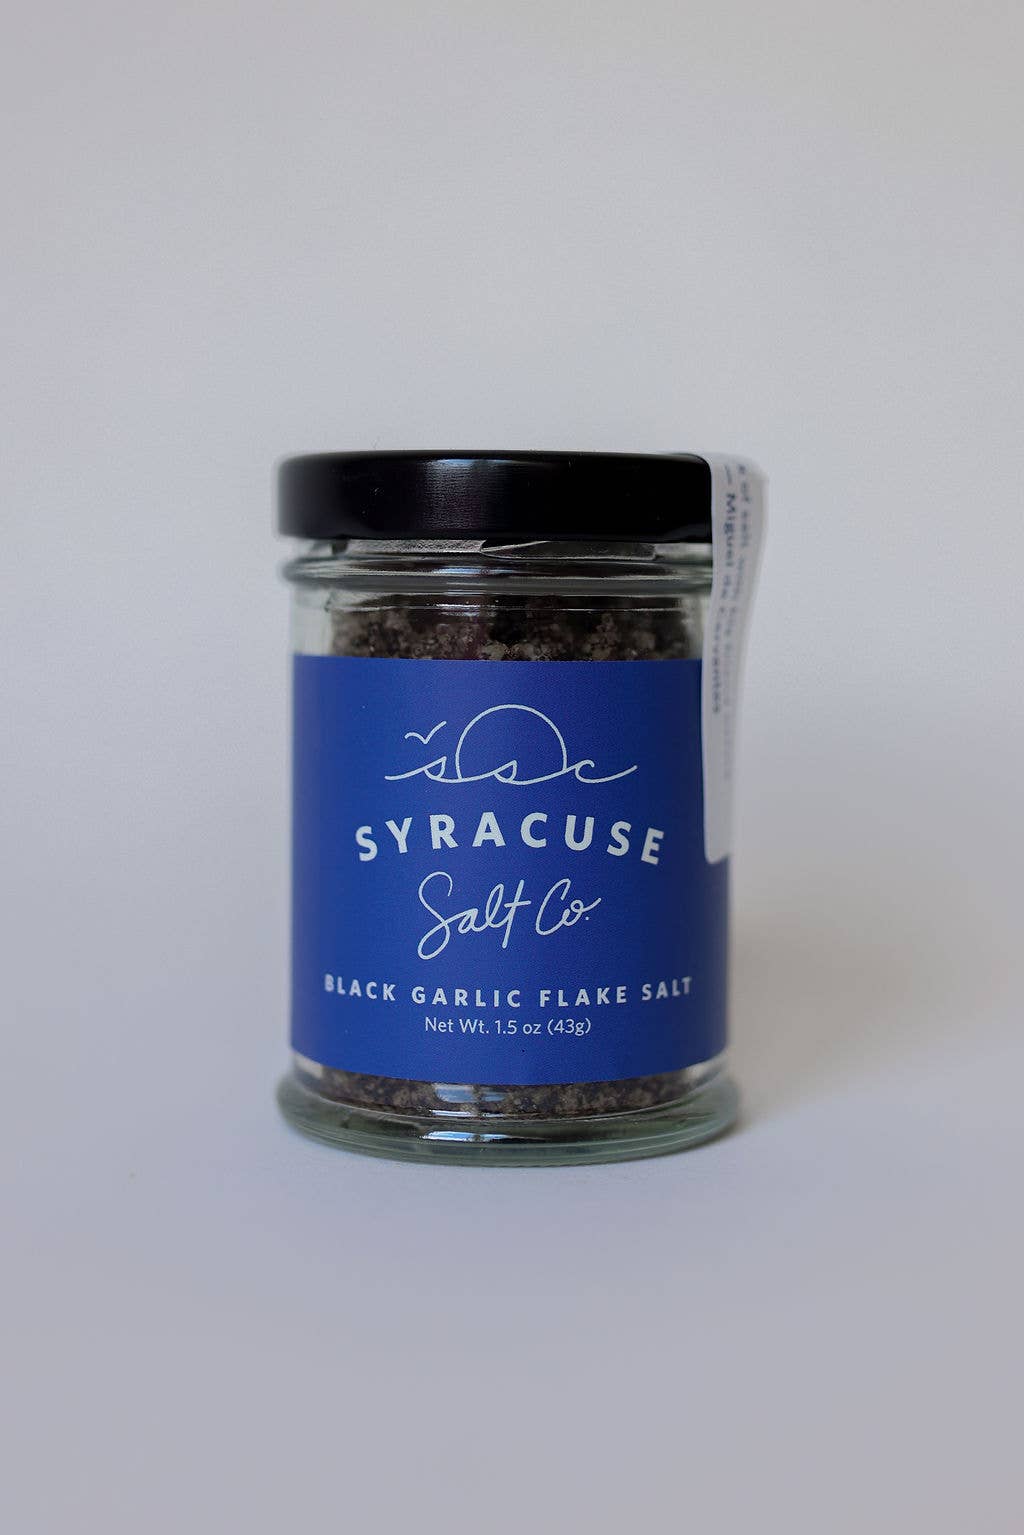 Syracuse Salt Co Black Garlic Flake Salt